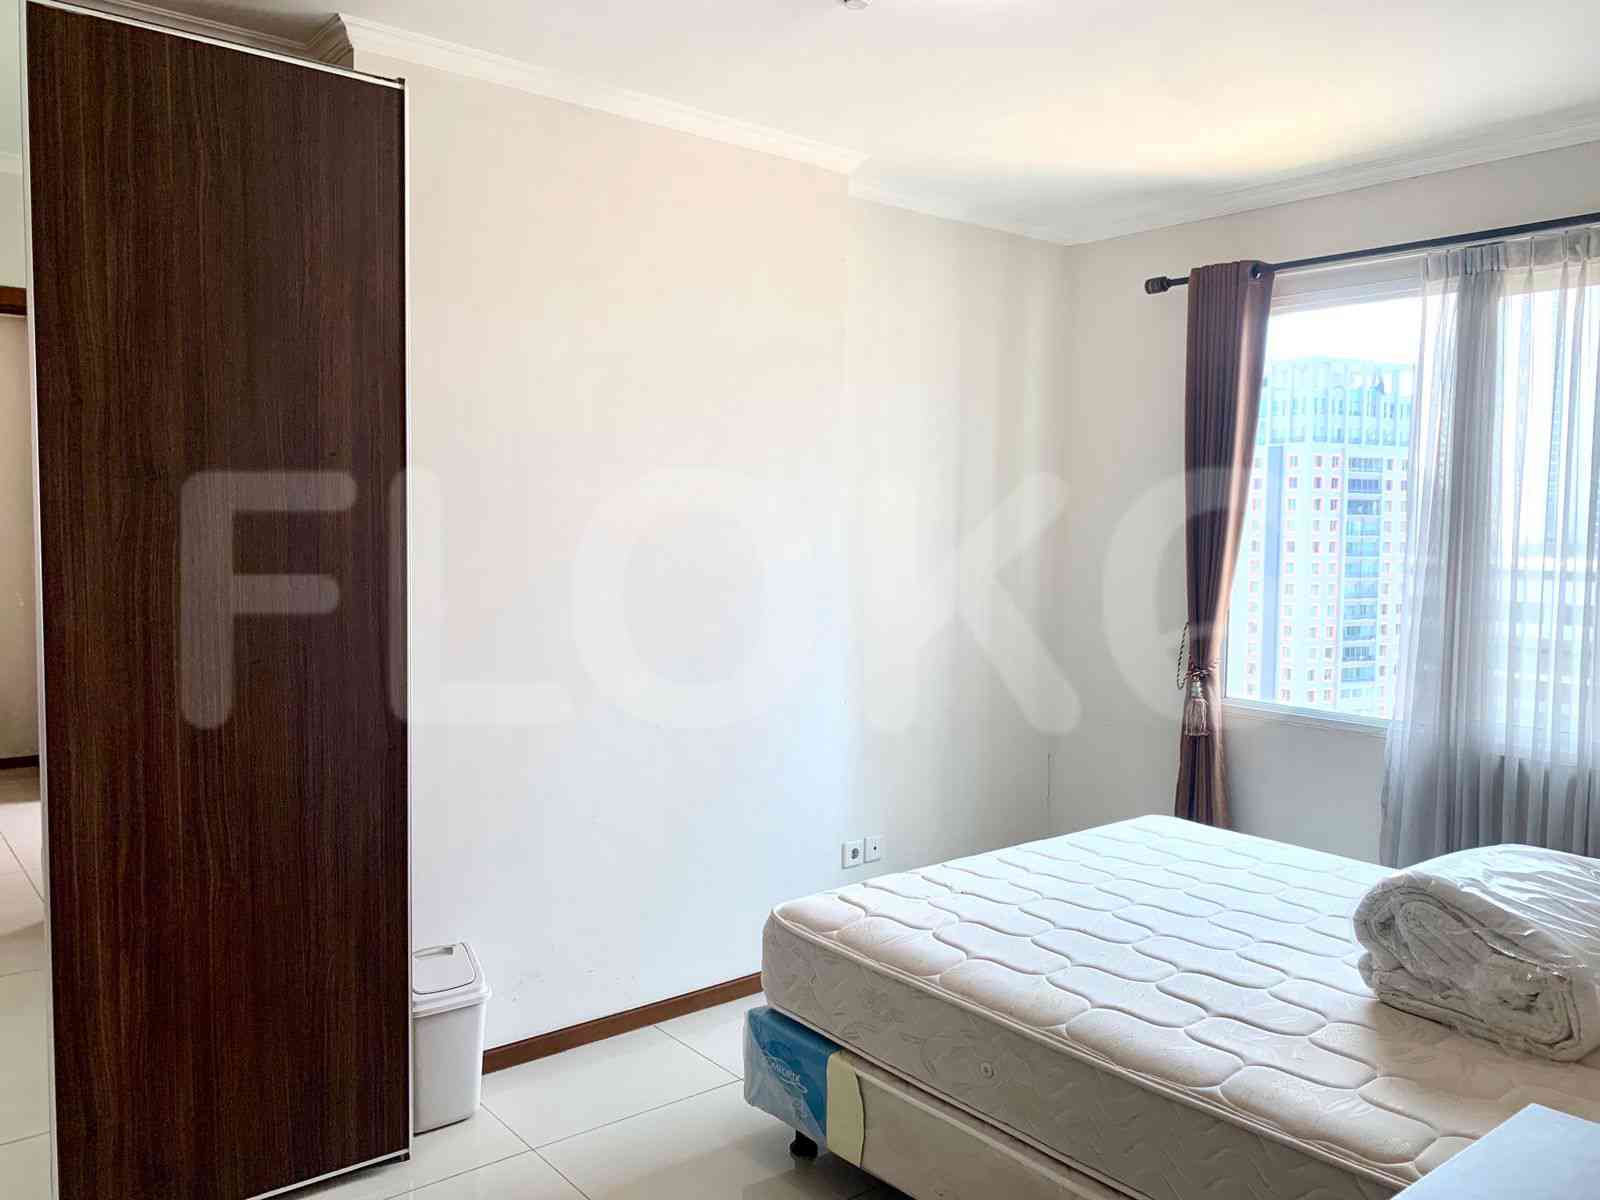 Tipe 1 Kamar Tidur di Lantai 15 untuk disewakan di Thamrin Executive Residence - fth150 3